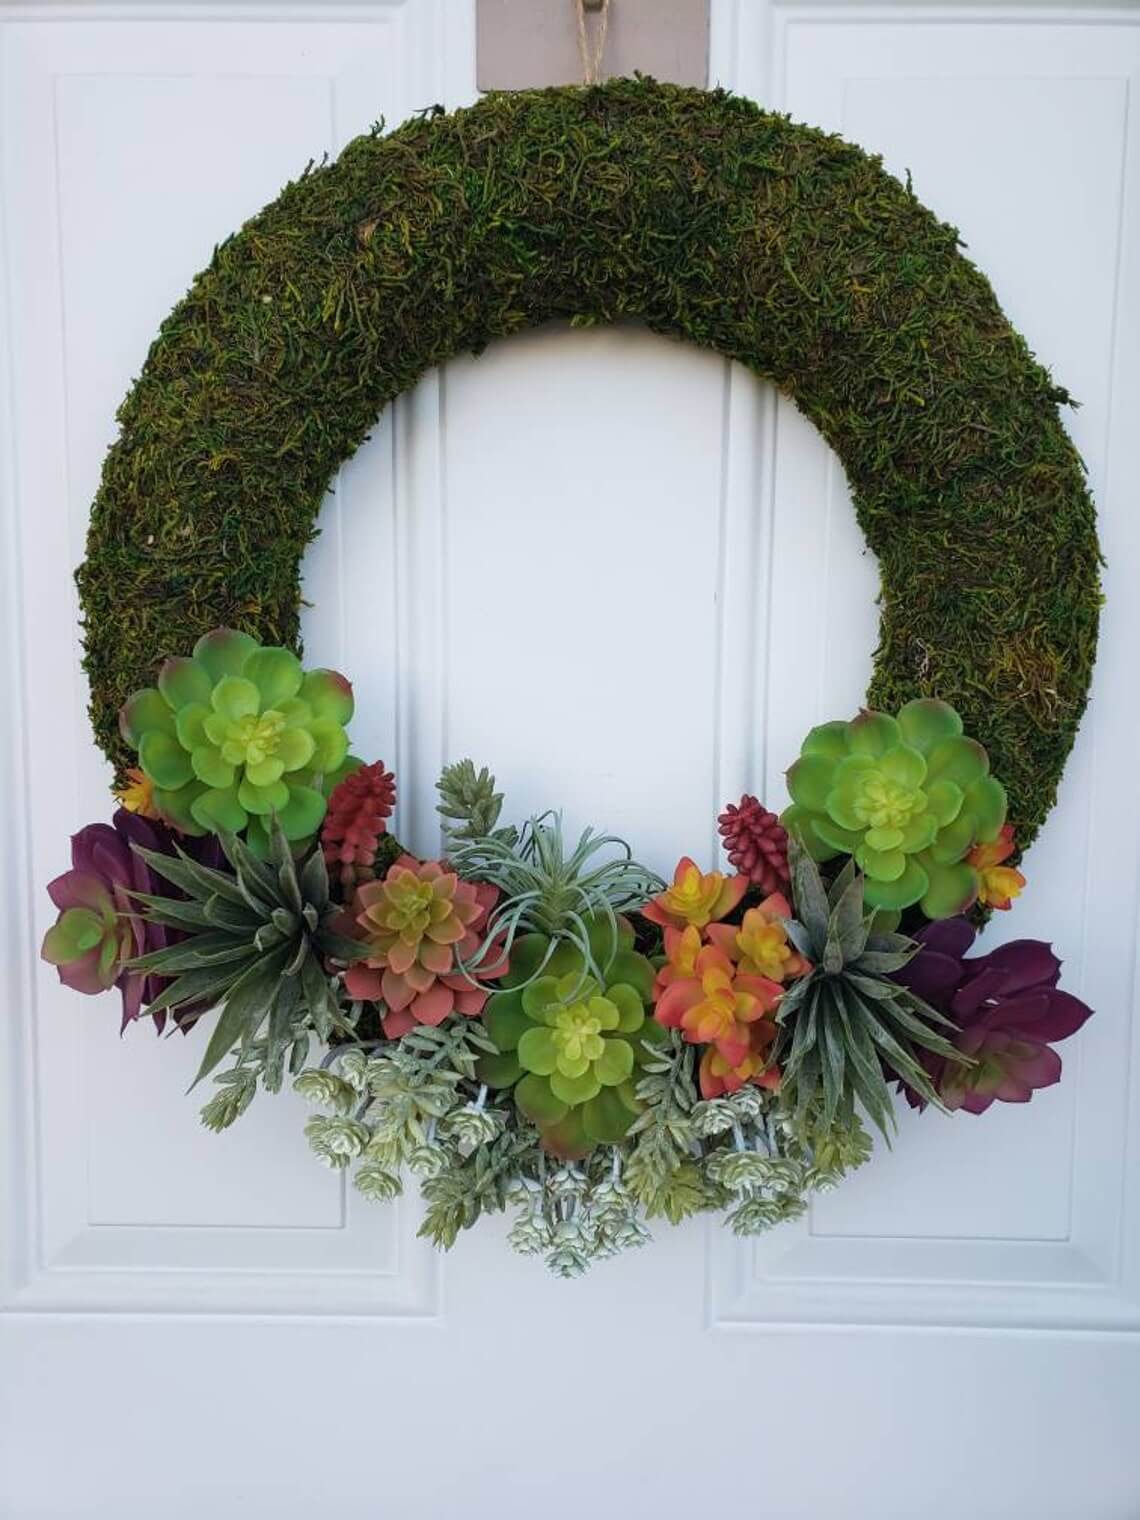 Plant Lover's Succulent Moss Wreath